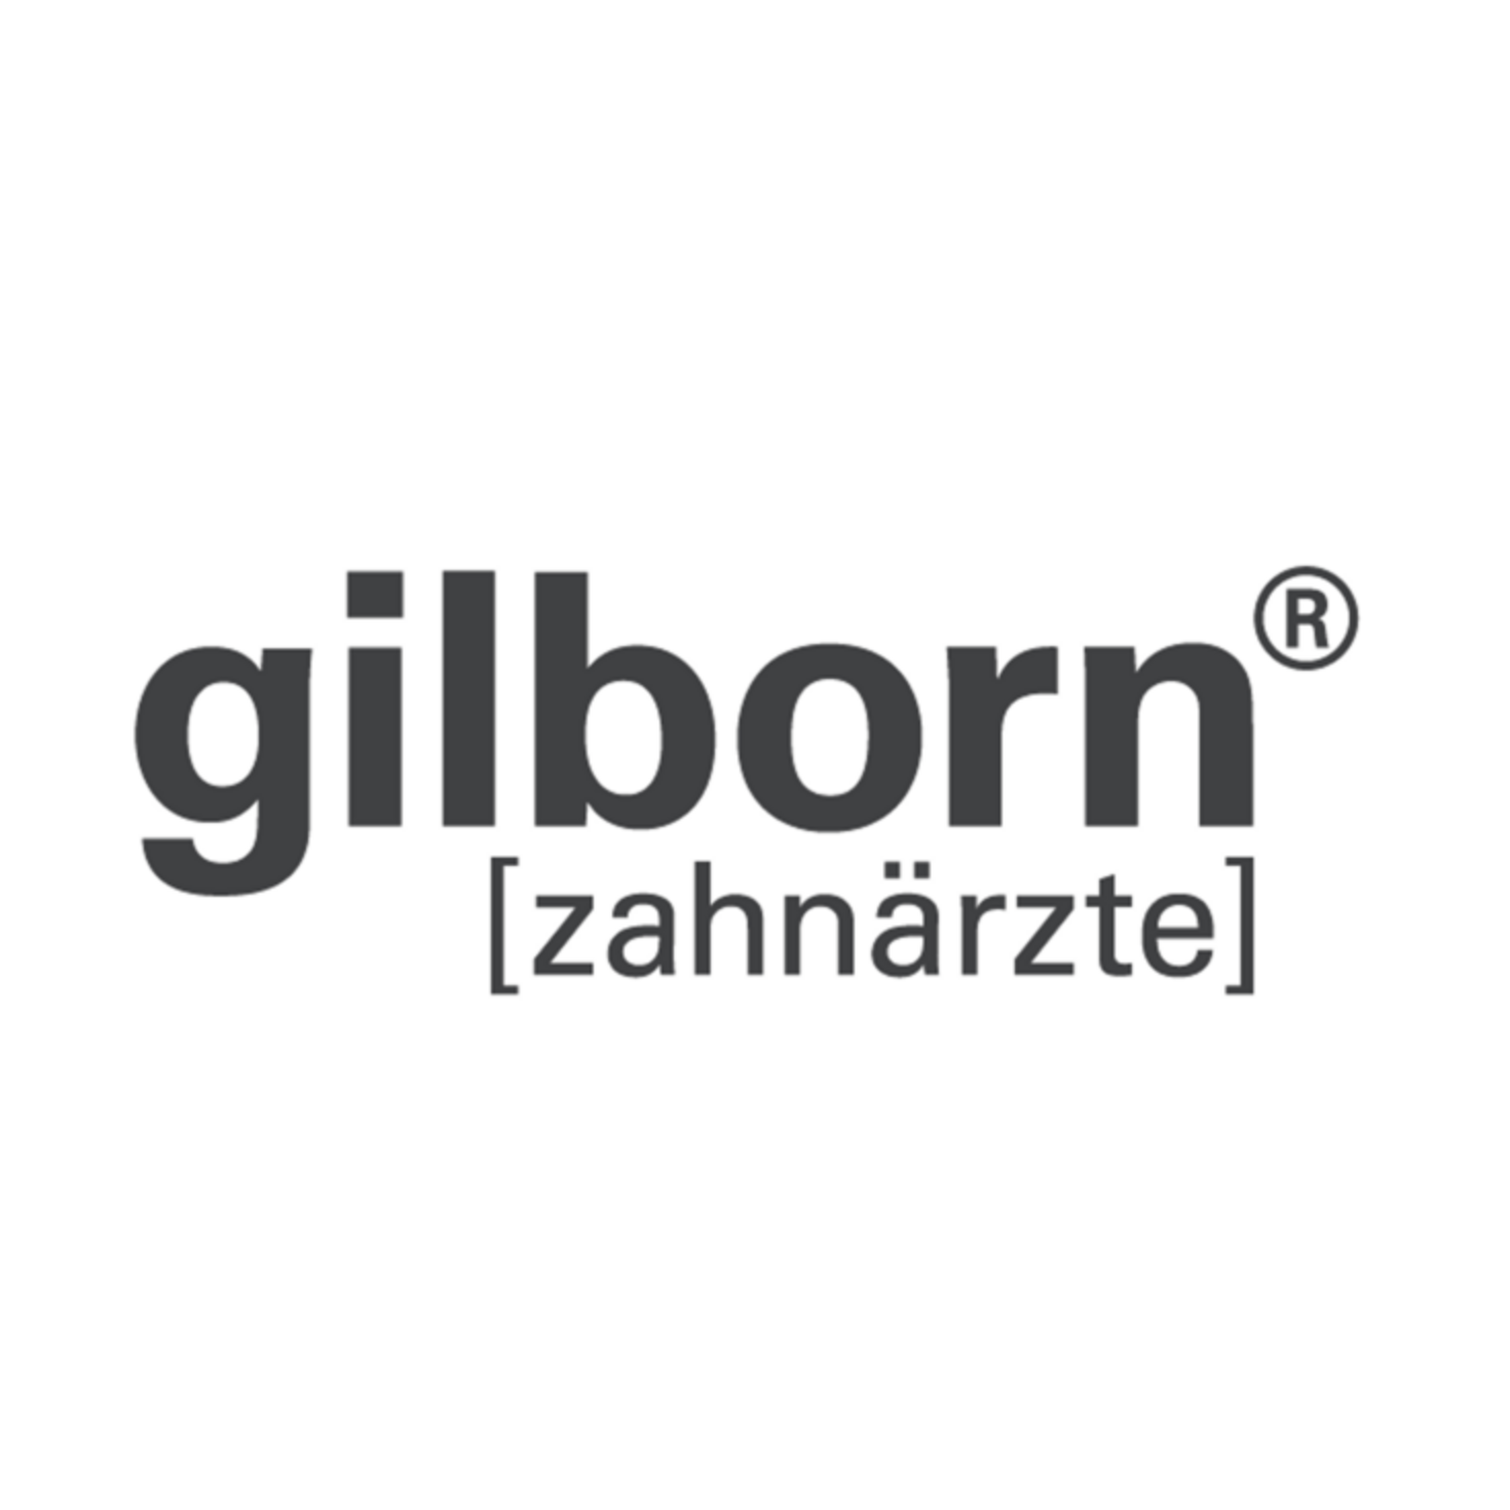 gilborn [zahnärzte] Dr. Jörg Schwitalla, ZA Jens Westermann, ZA Andreas Nußbicker in Wedemark - Logo